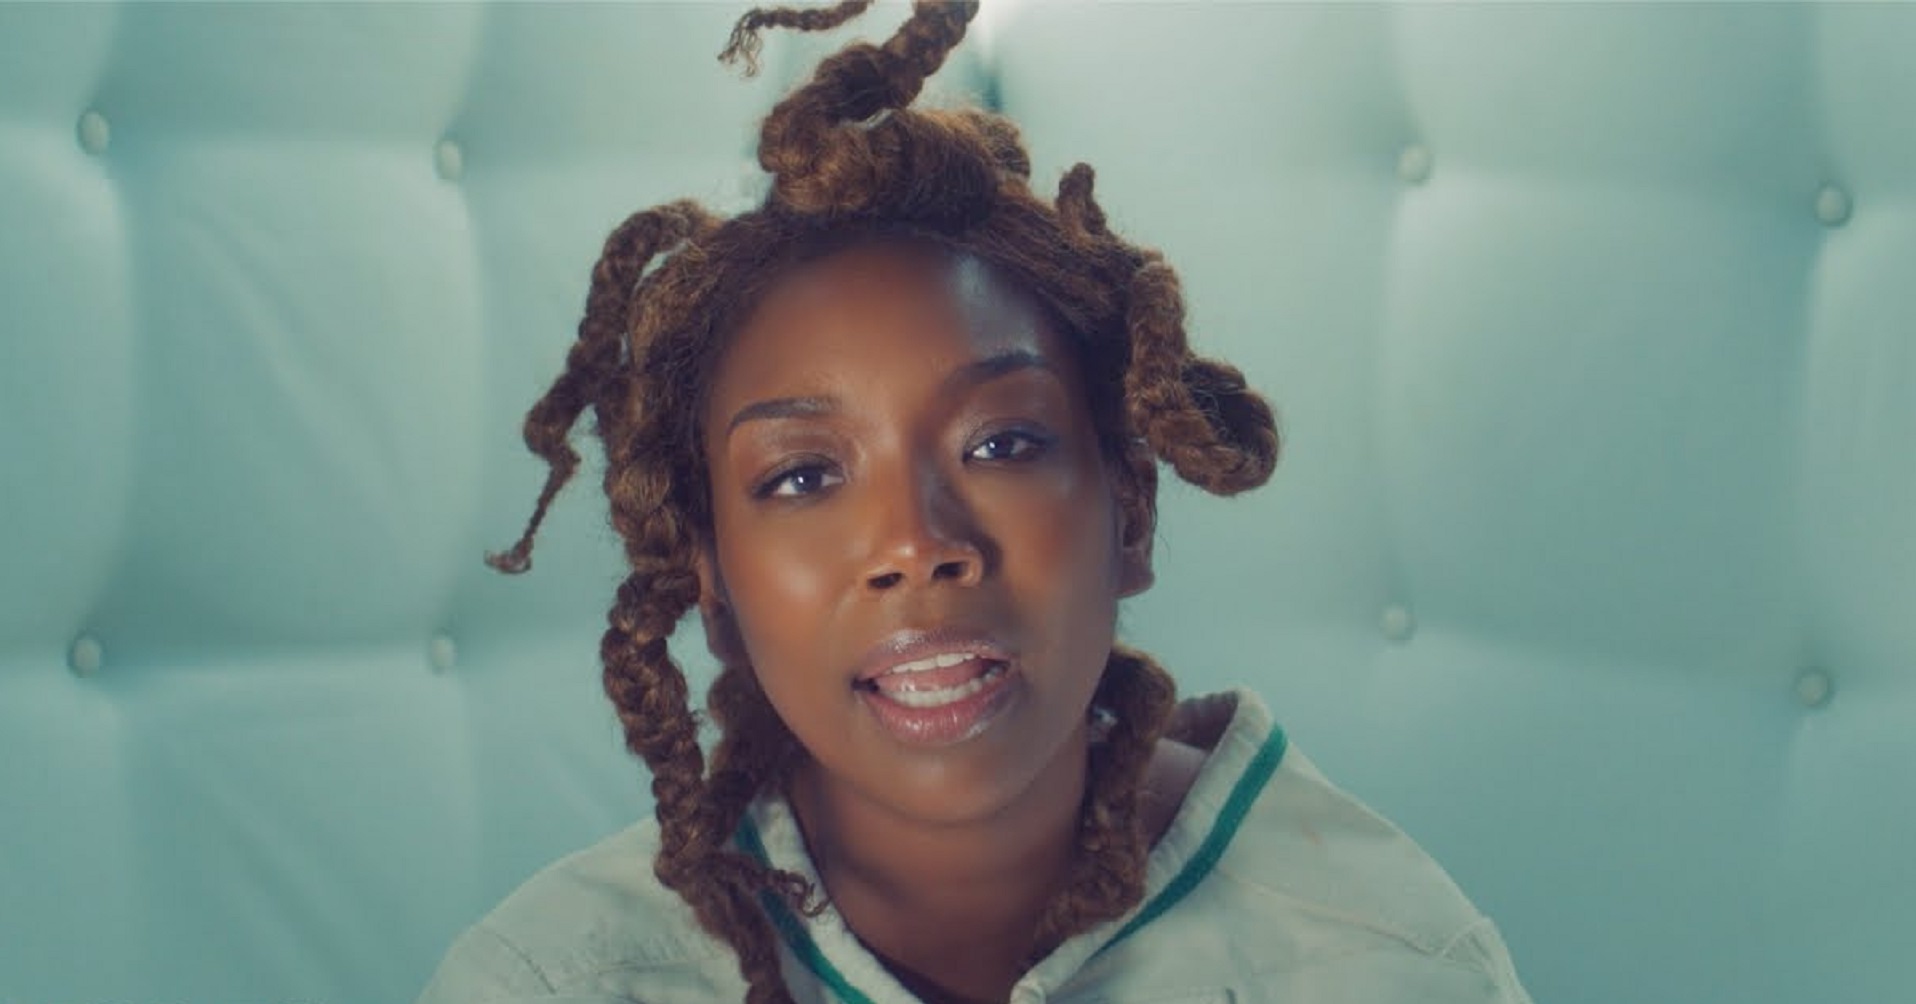 Watch Brandy’s Brand New Music Video ‘Borderline’ From New Album ‘B7’